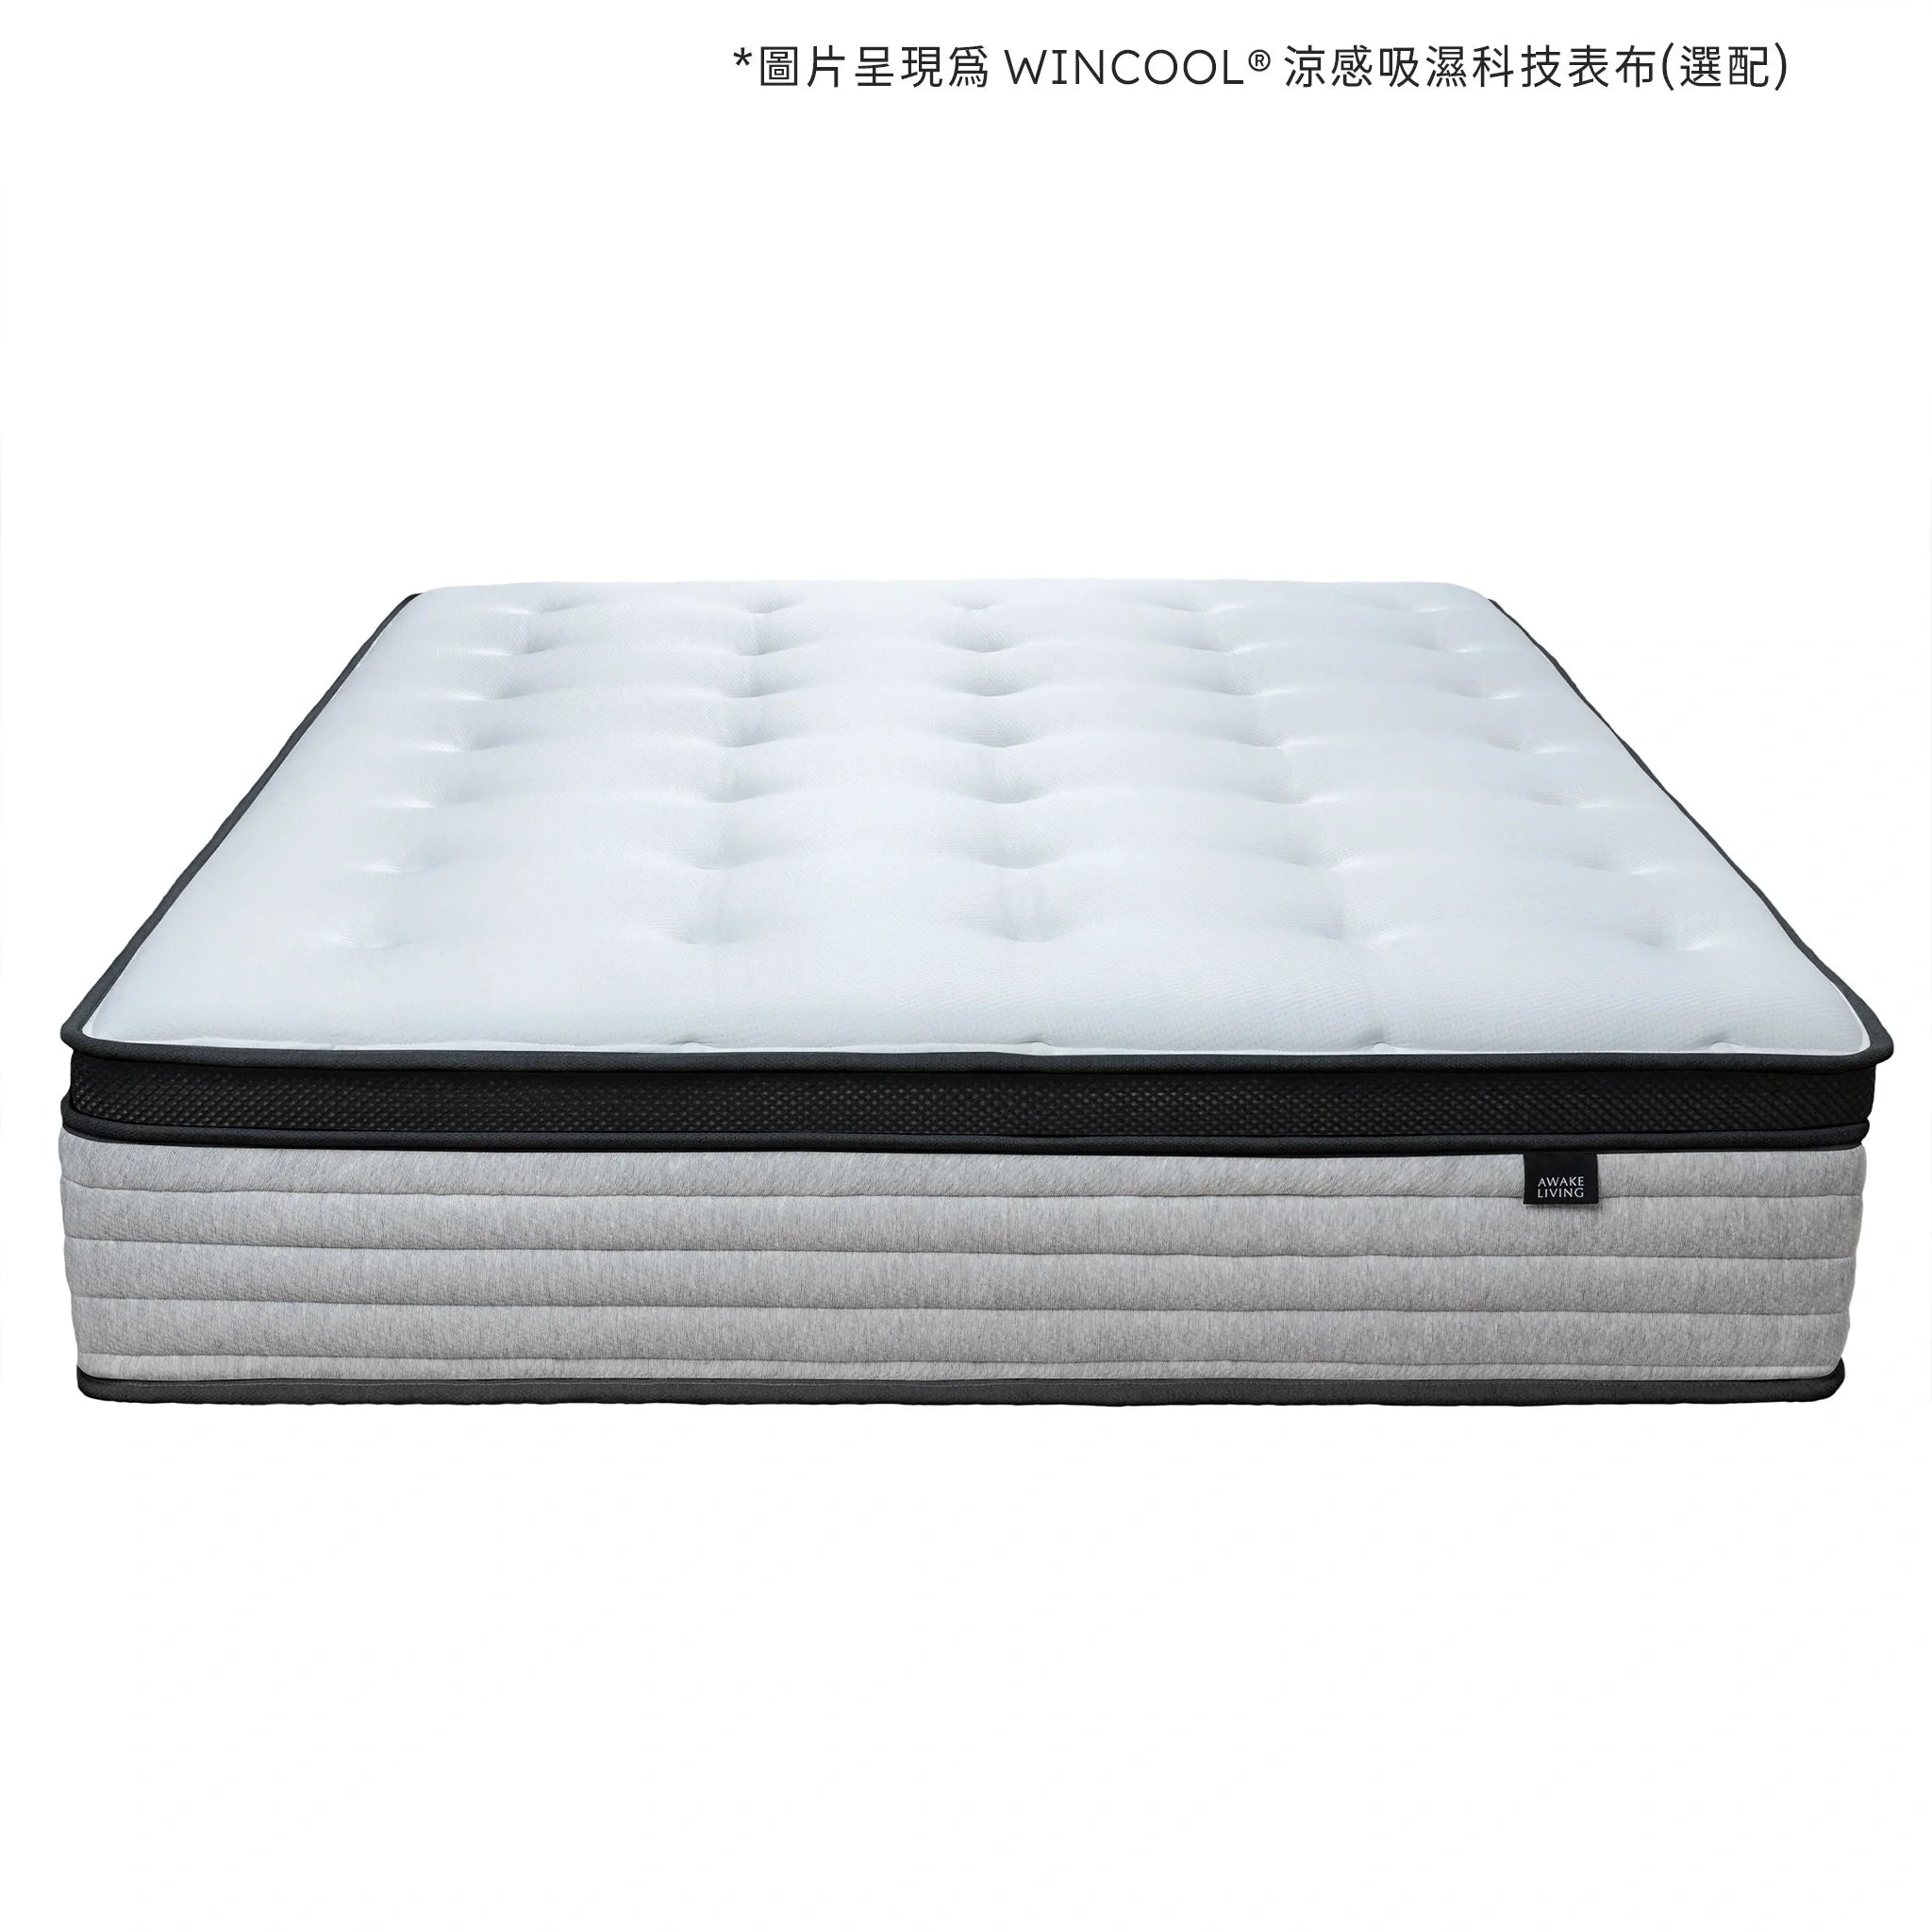 Solid 2.4 護脊安眠高支撐乳膠獨立筒床墊產品照 - 2